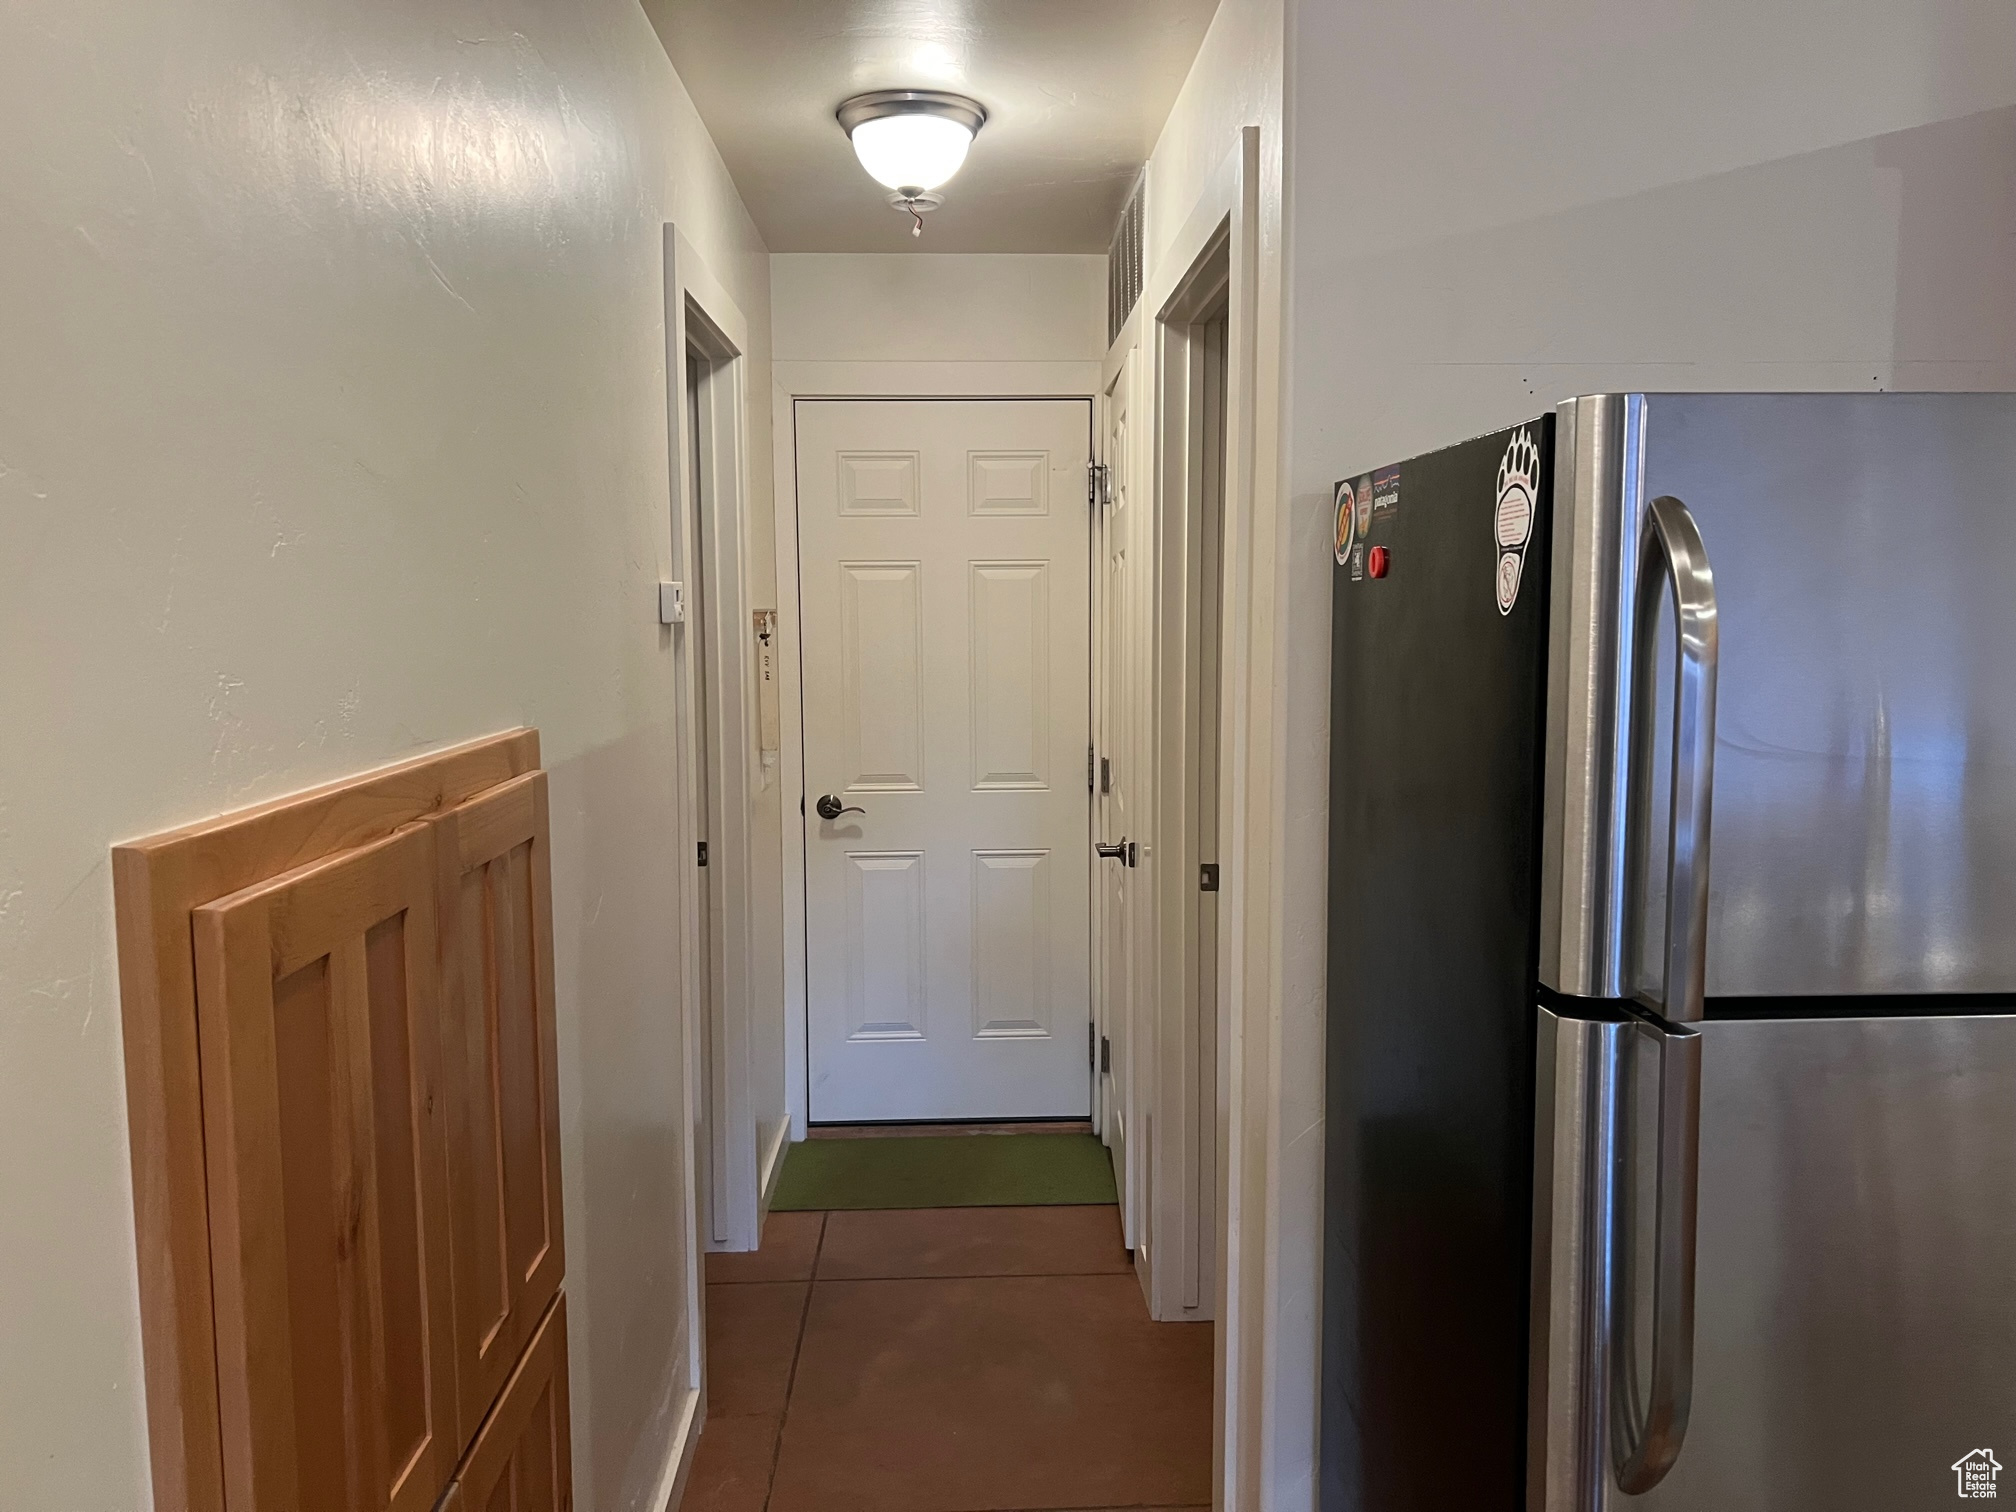 Corridor to bath, laundry and garage